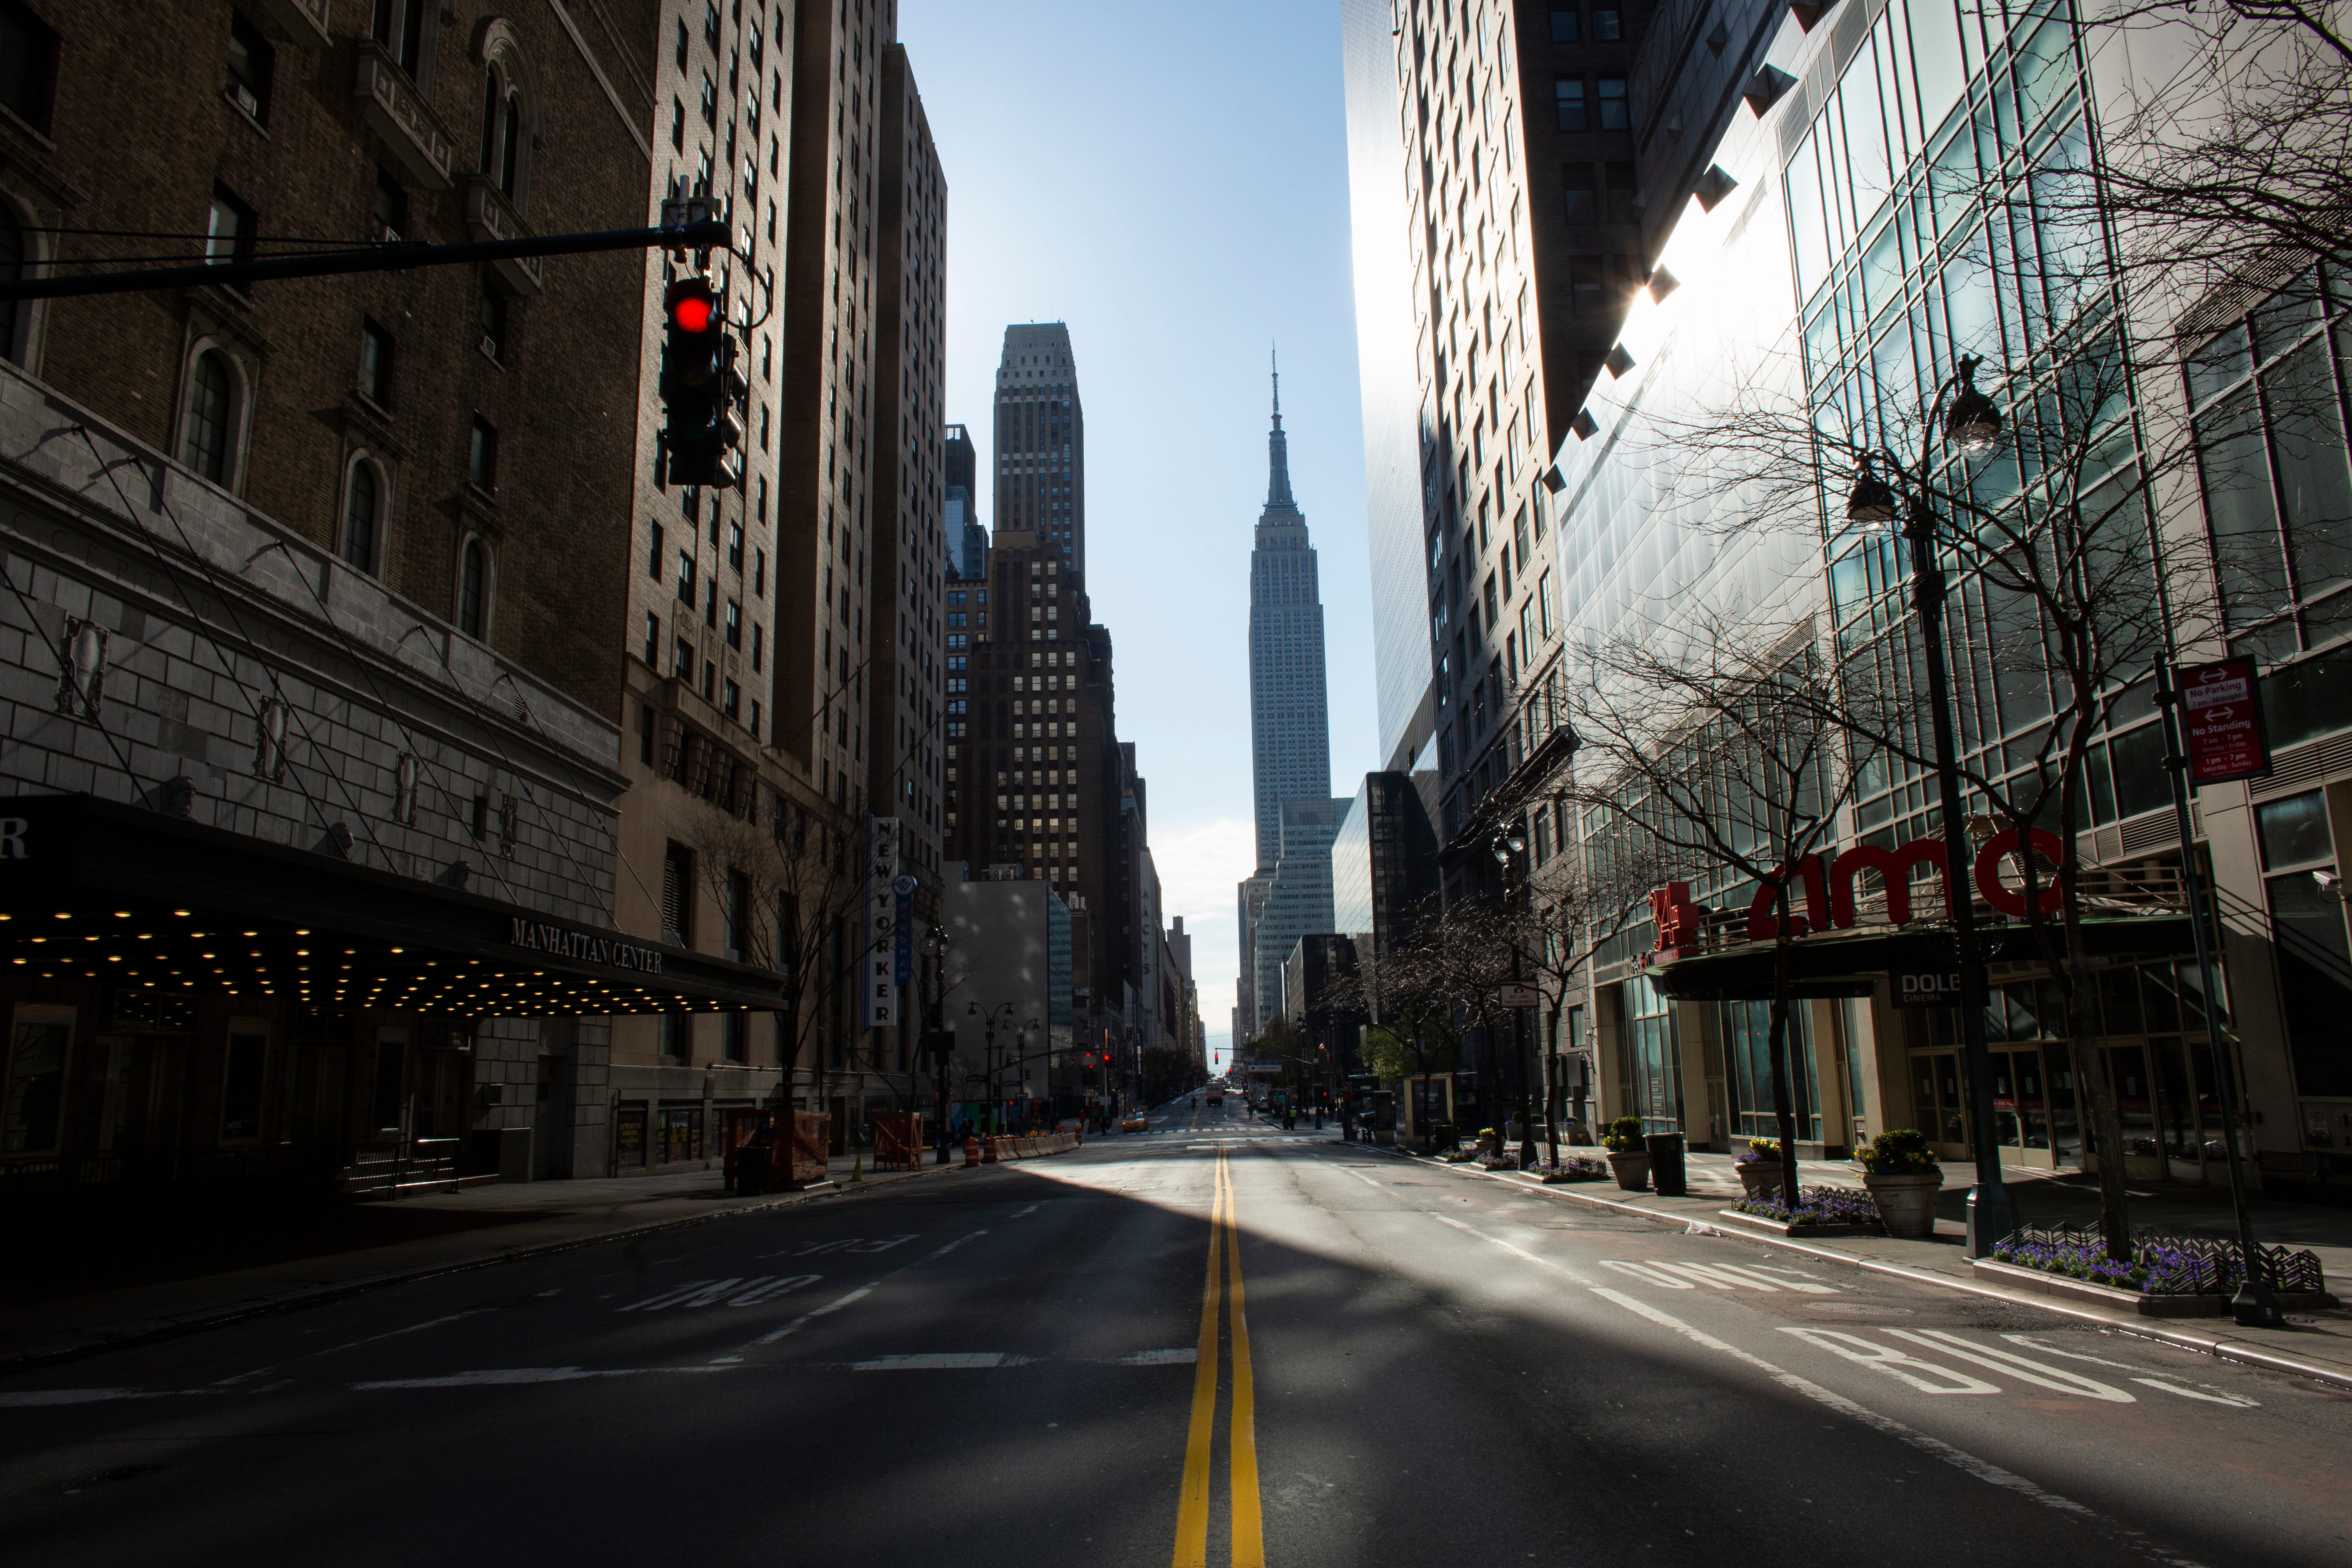 New york city streets